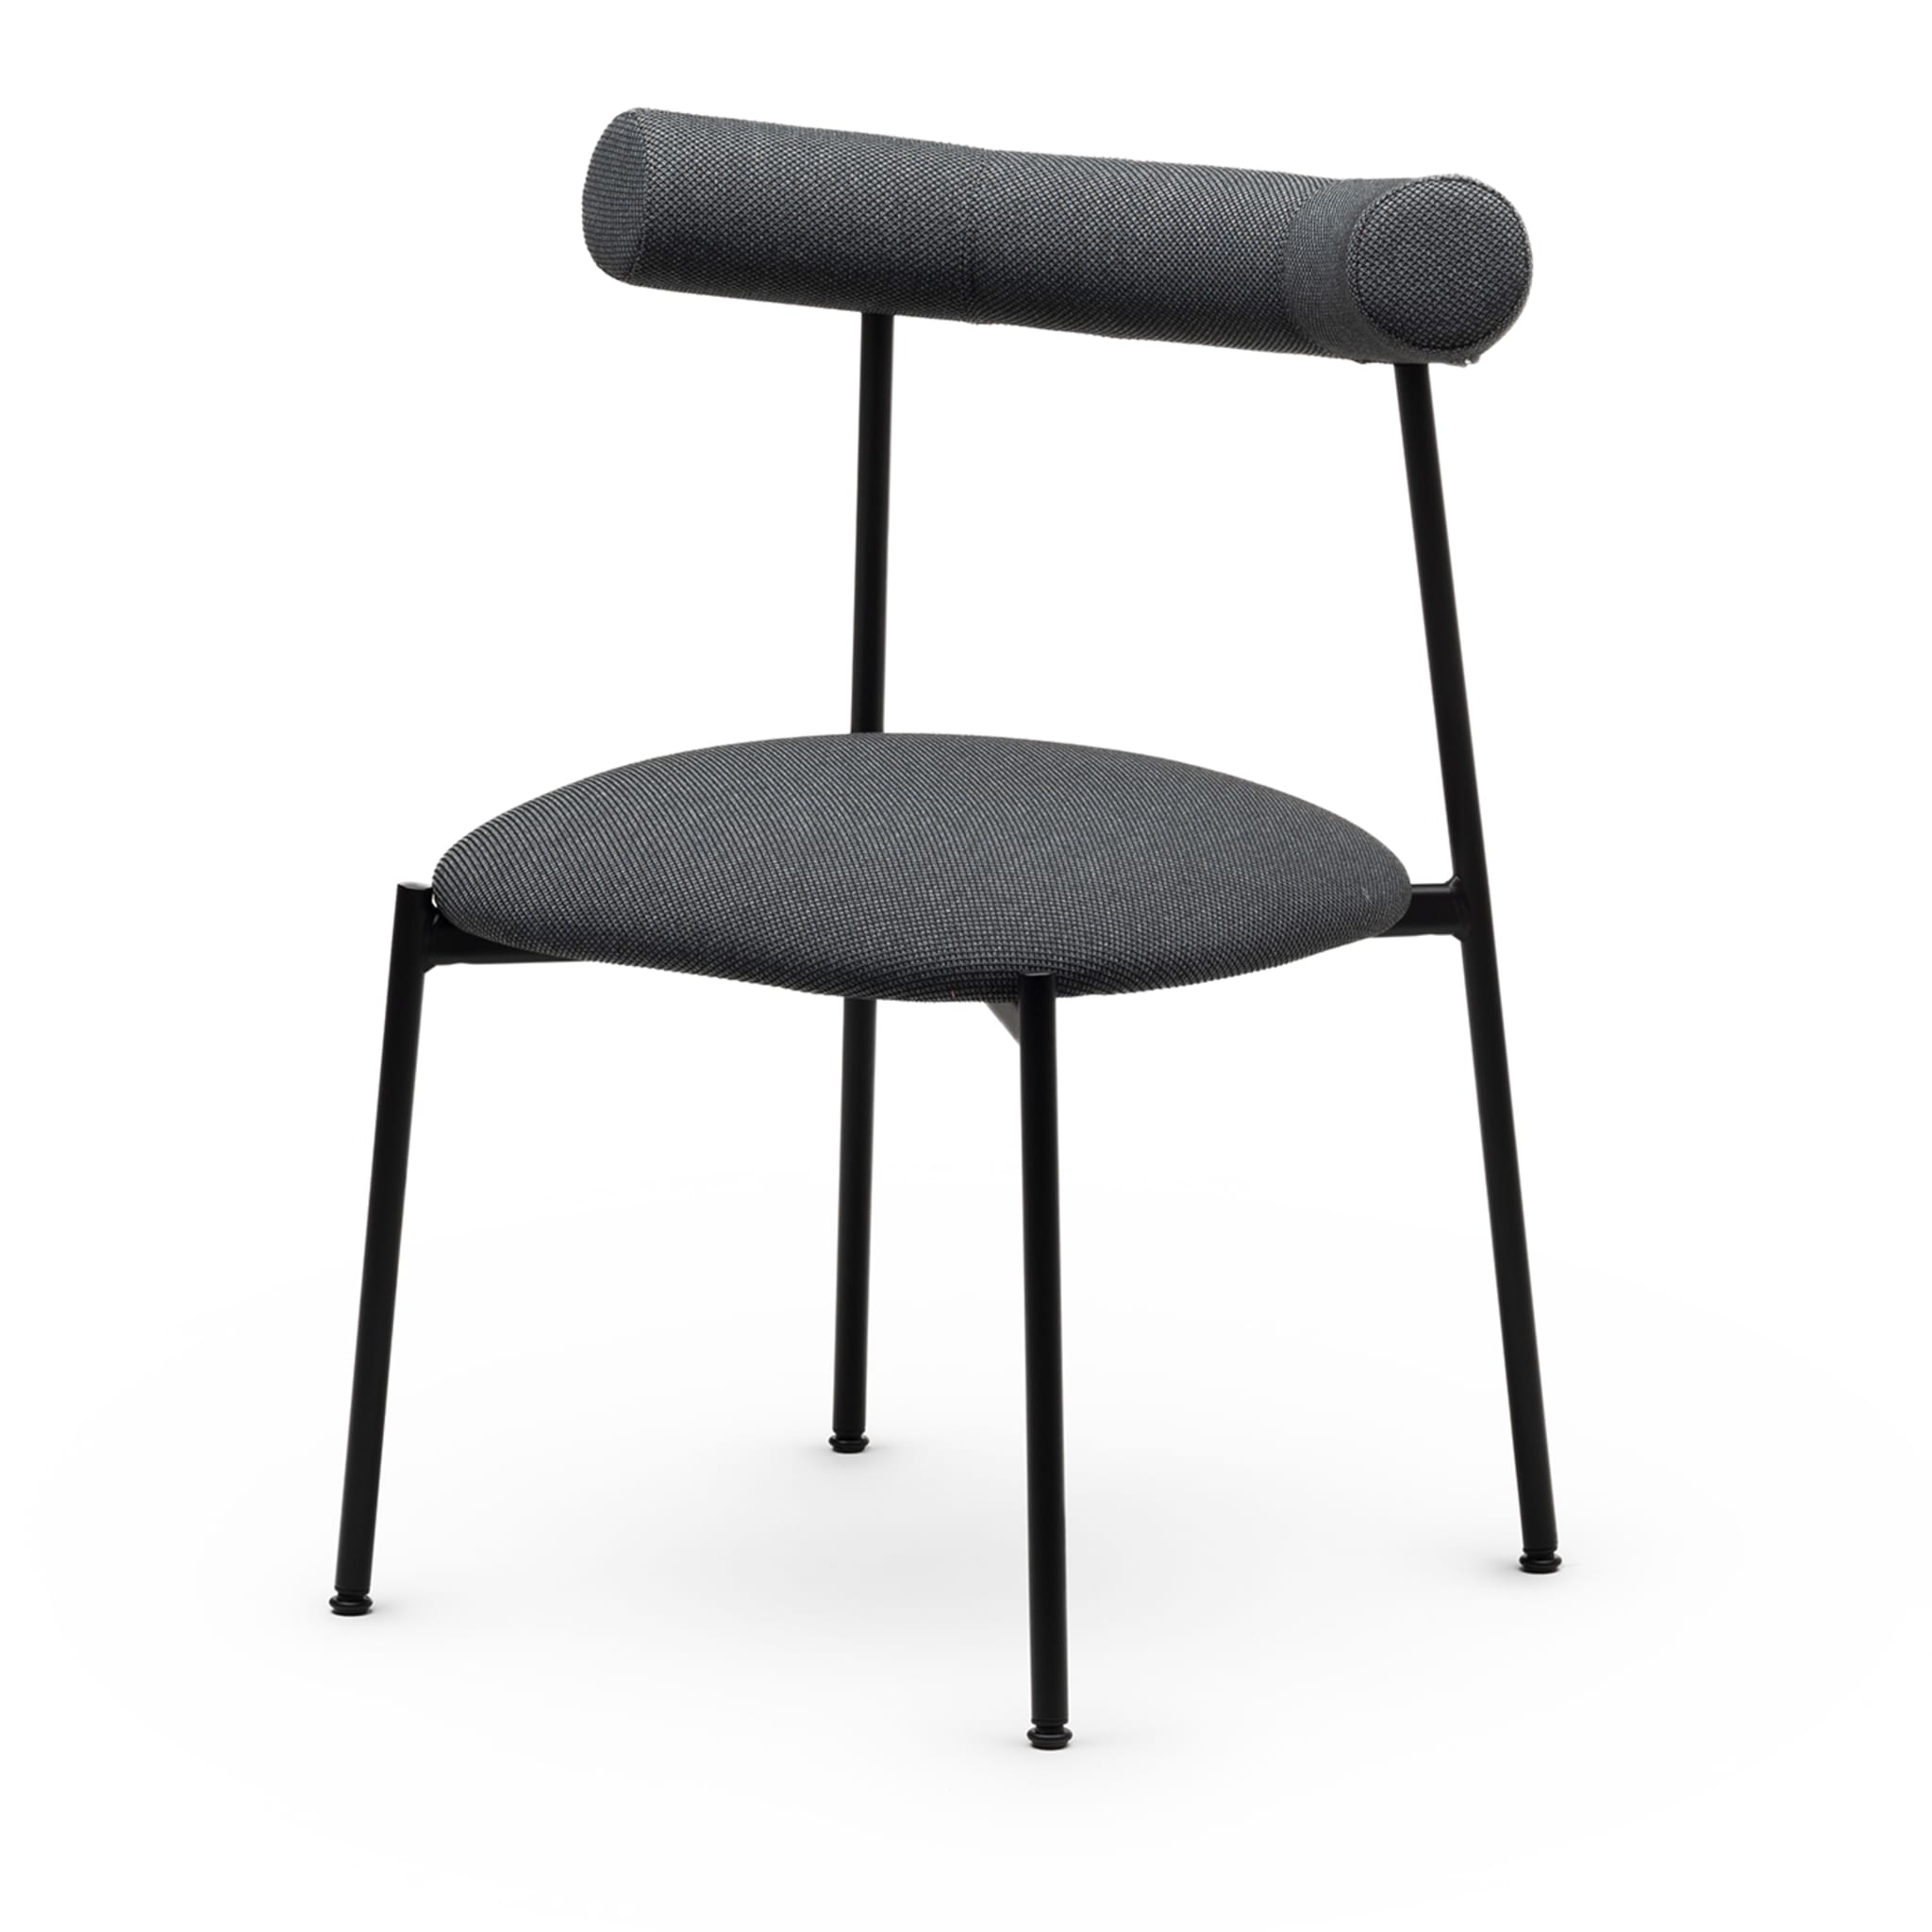 Pampa S Gray Chair by Studio Pastina - Alternative view 2